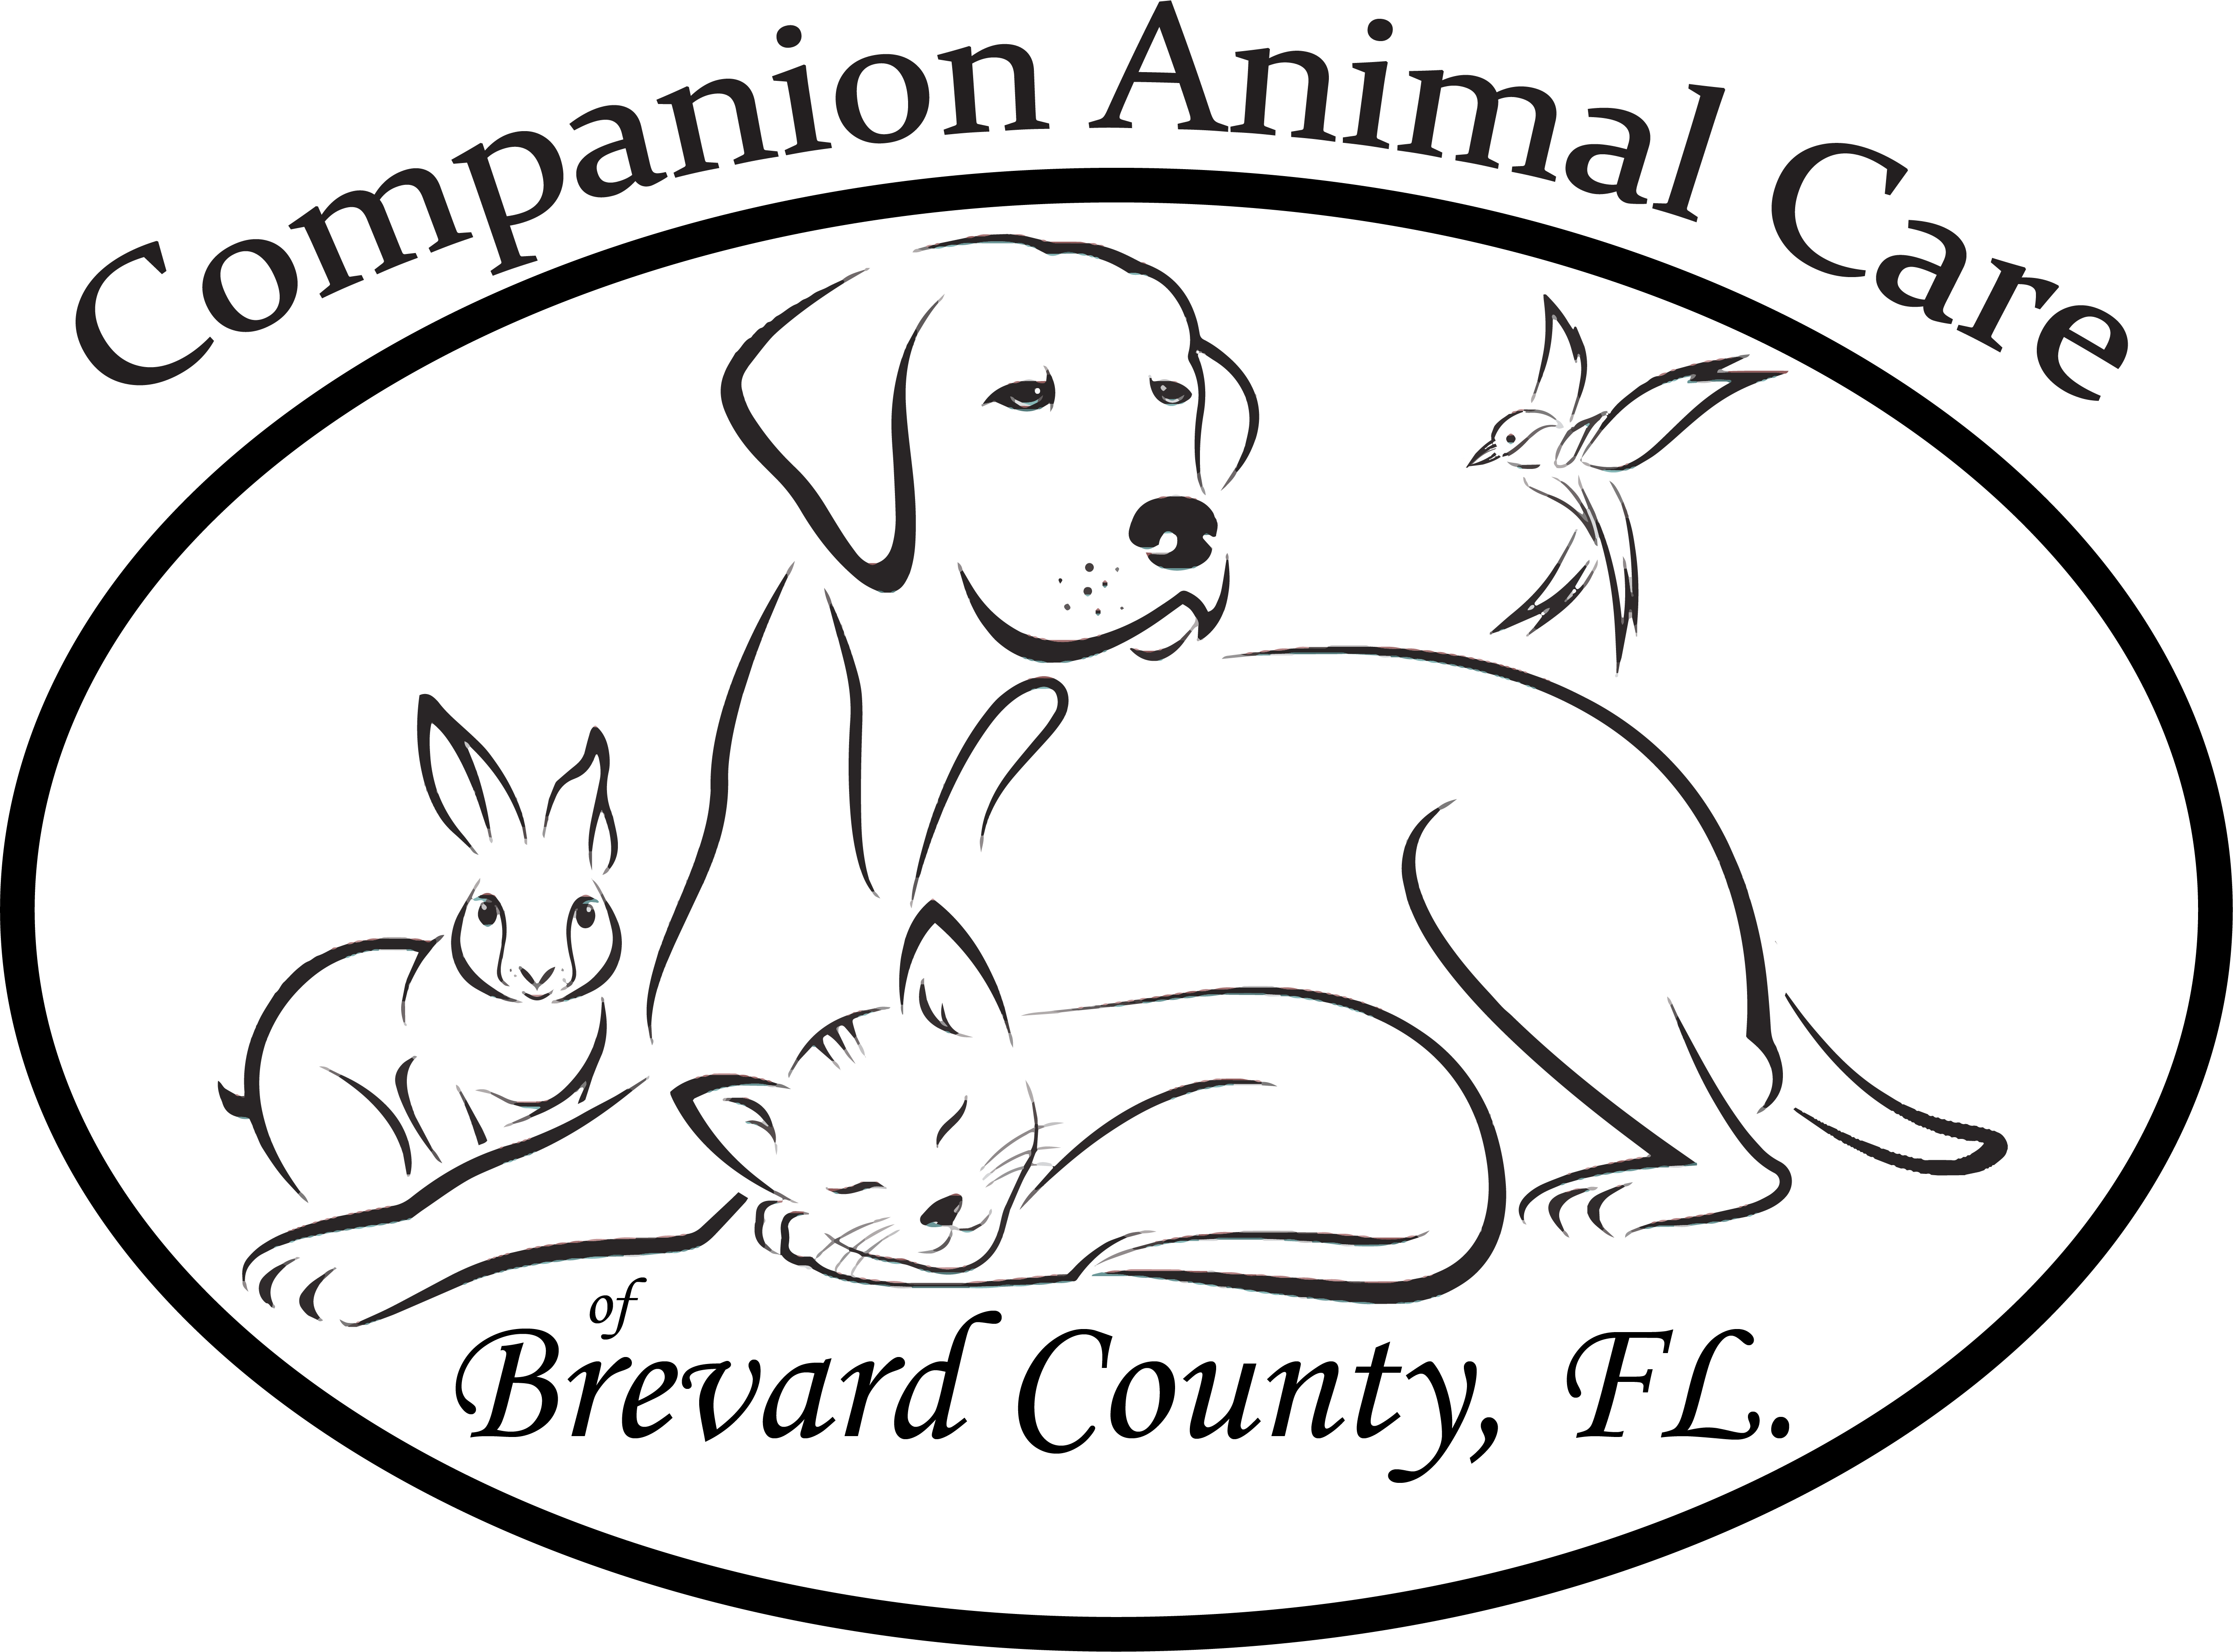 Companion Animal Care of Brevard County logo